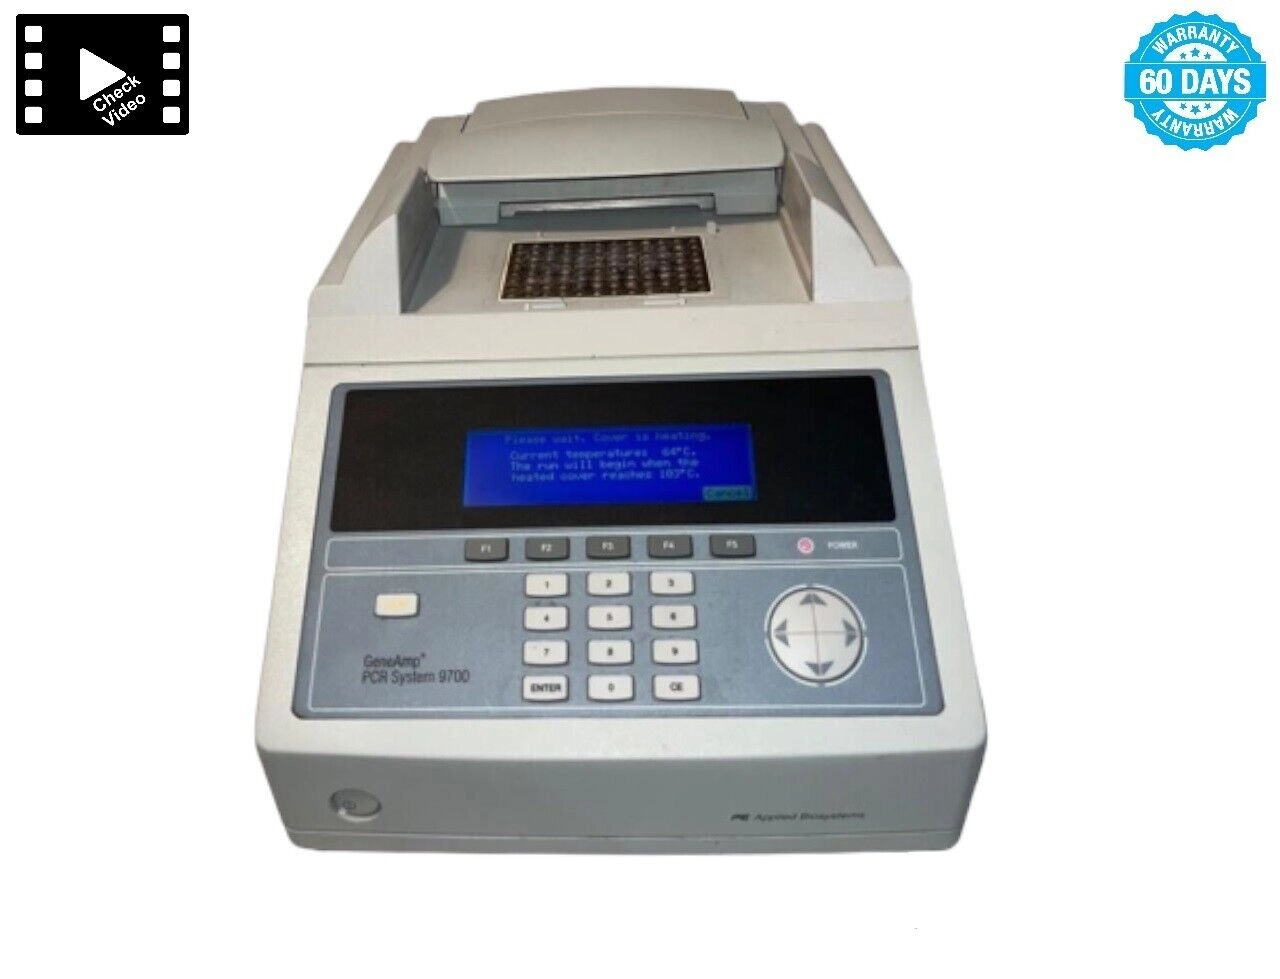 Applied Biosystems GeneAmp PCR System 9700  60 DAY